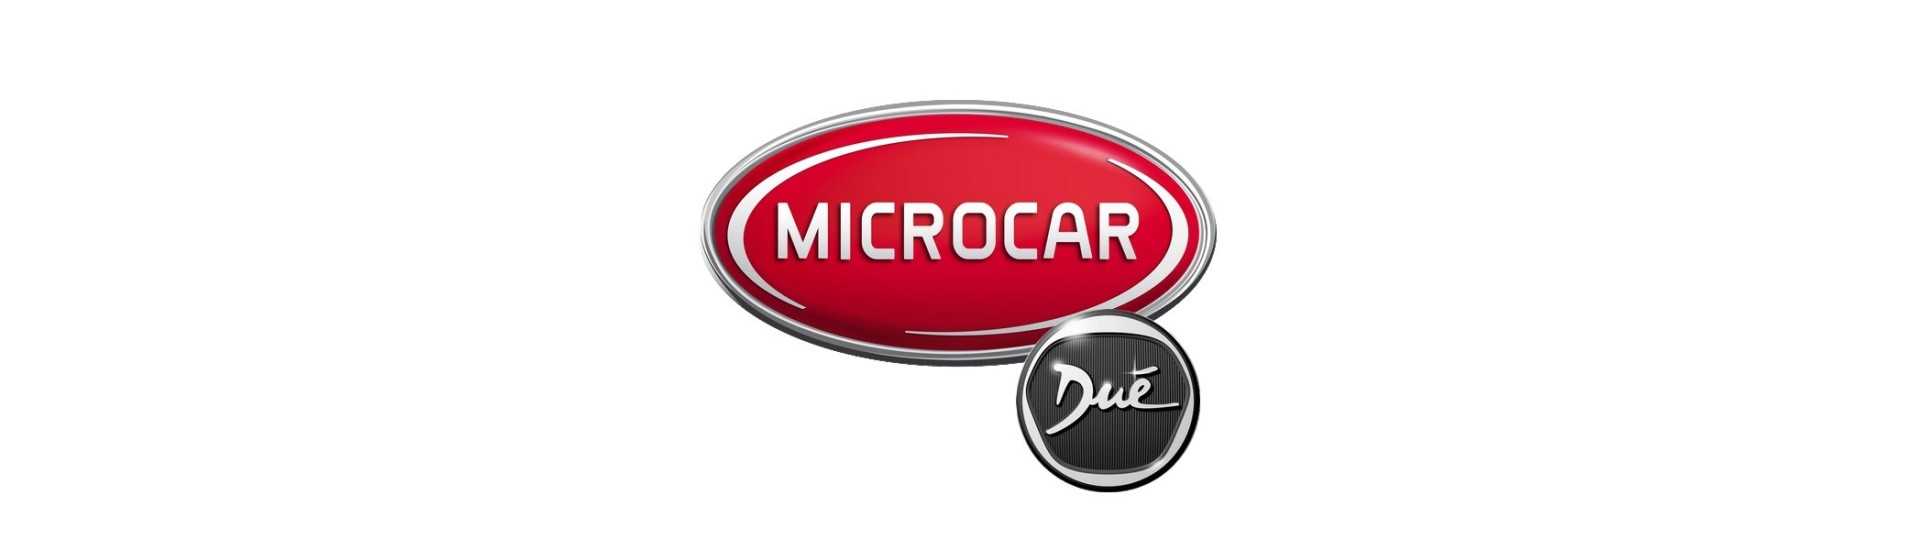 Bästa prisalternativ bälte bil utan licens Microcar Dué